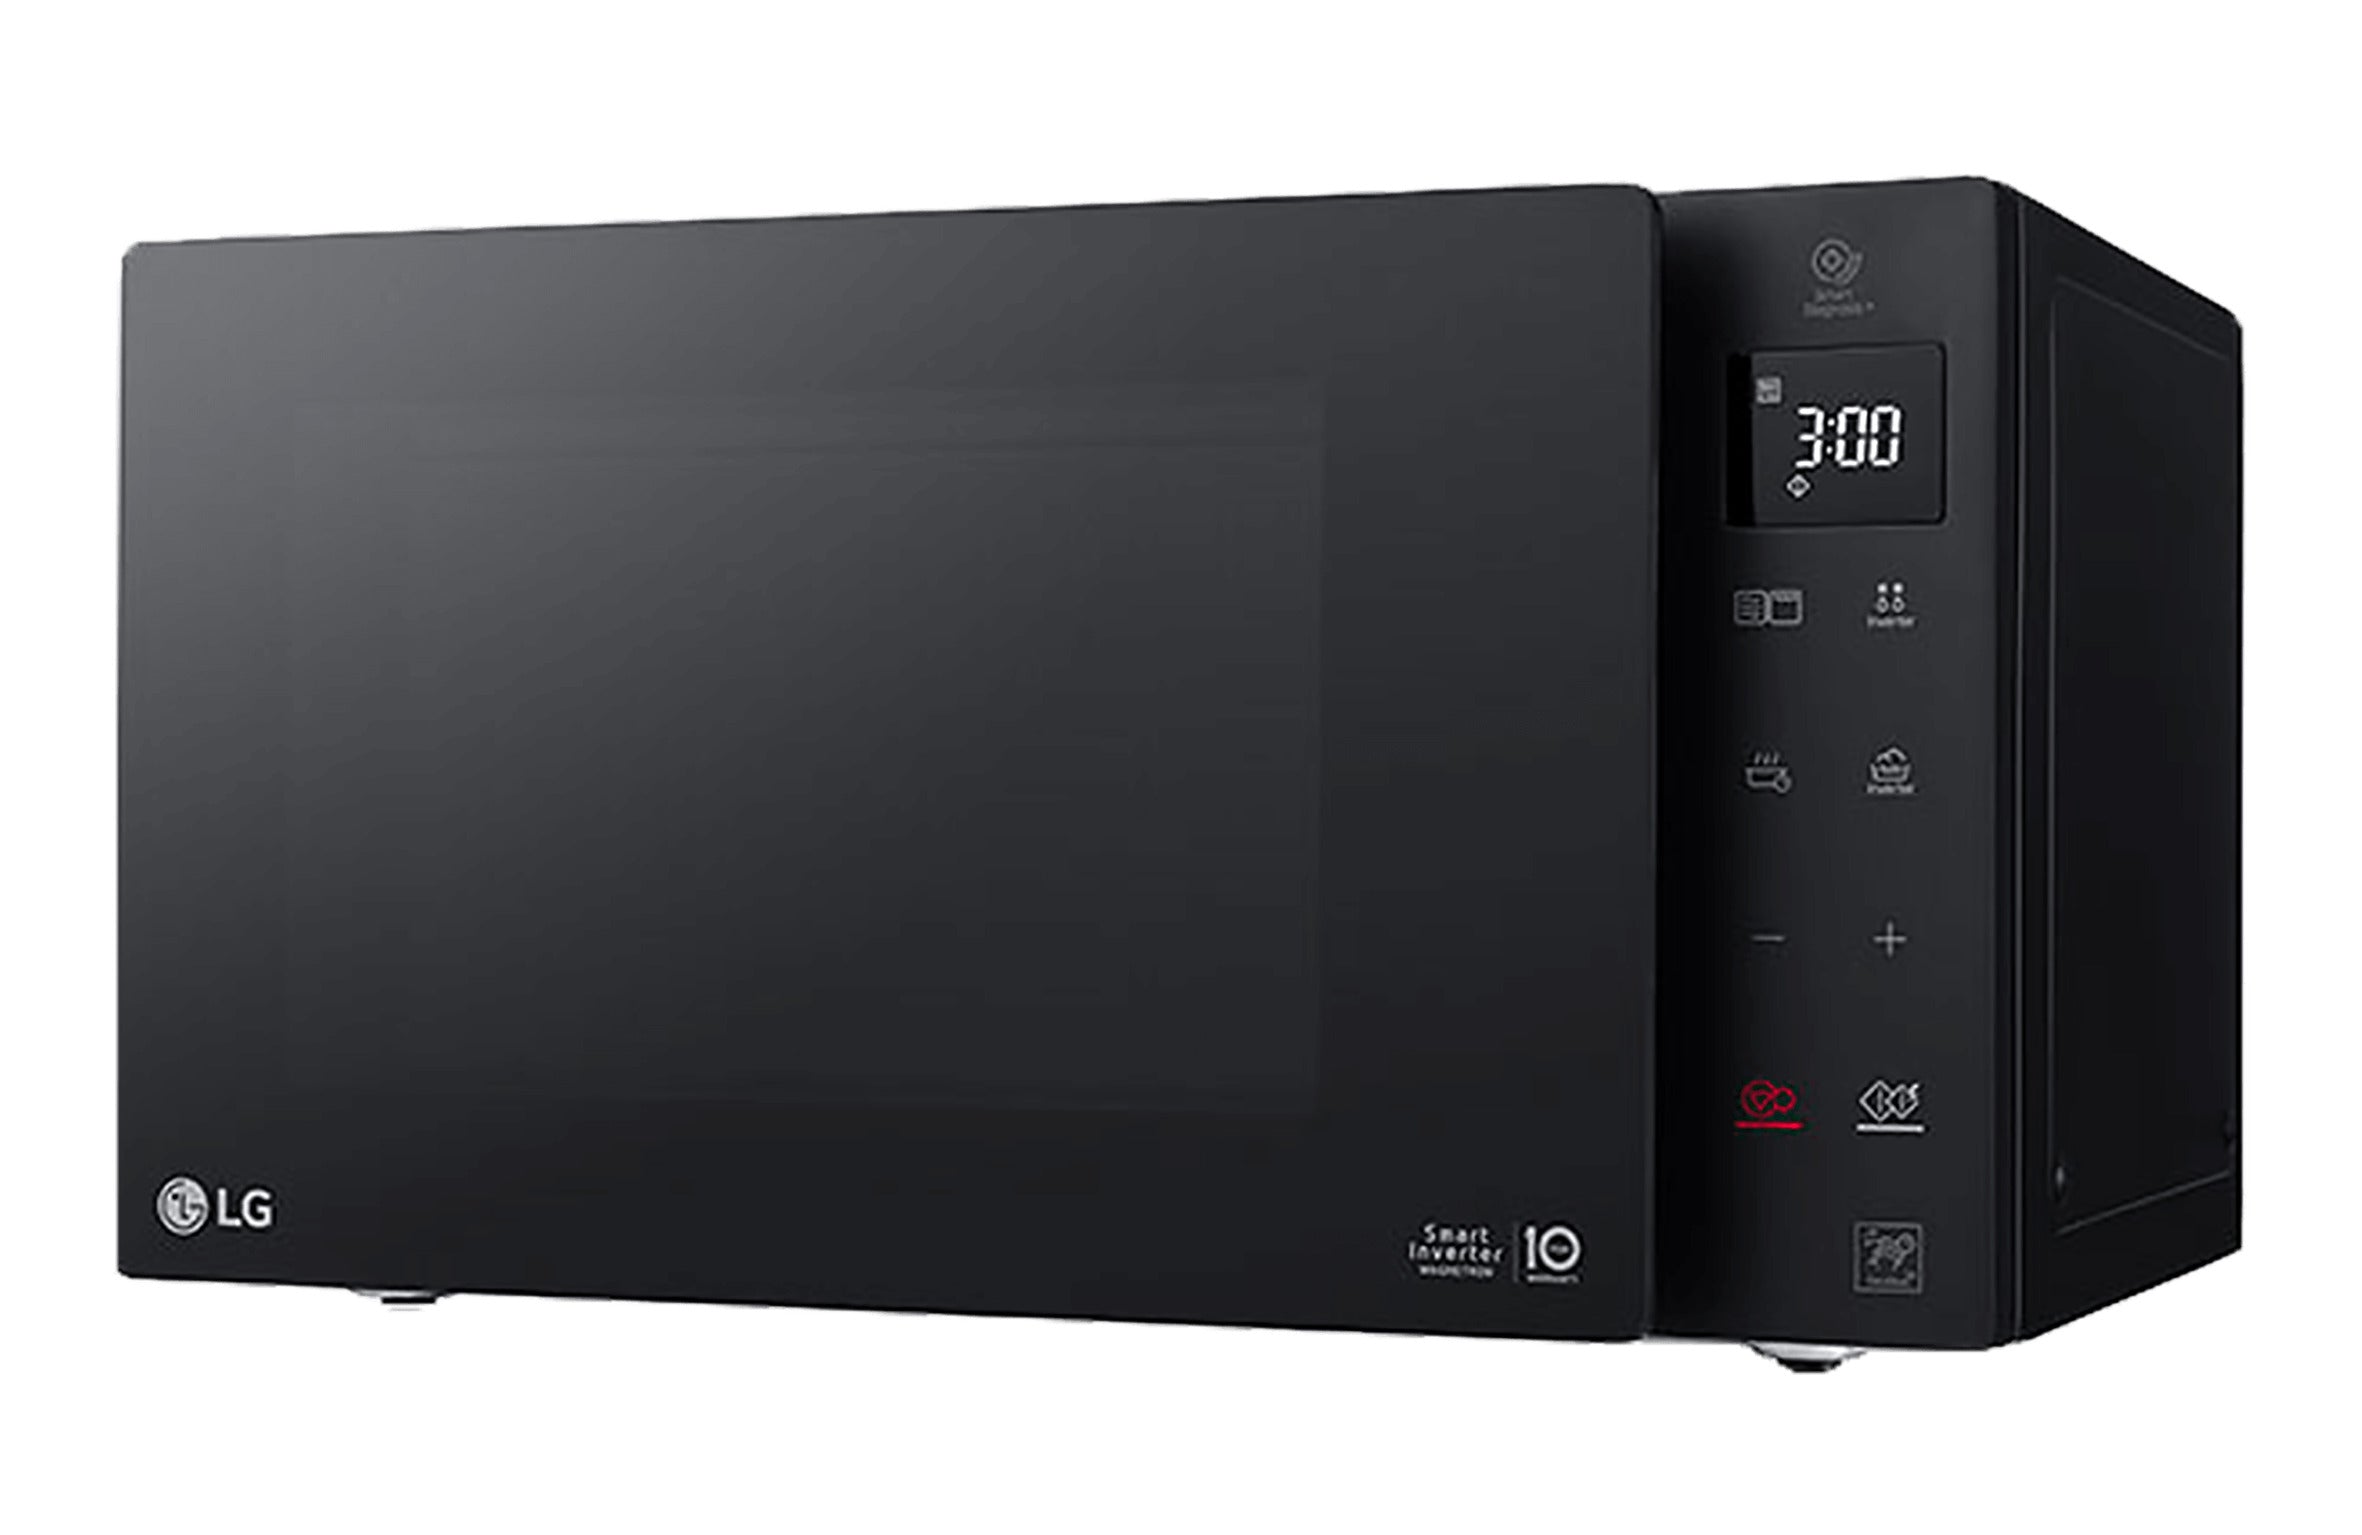 LG 42L Microwave Oven Black MS4235GIS